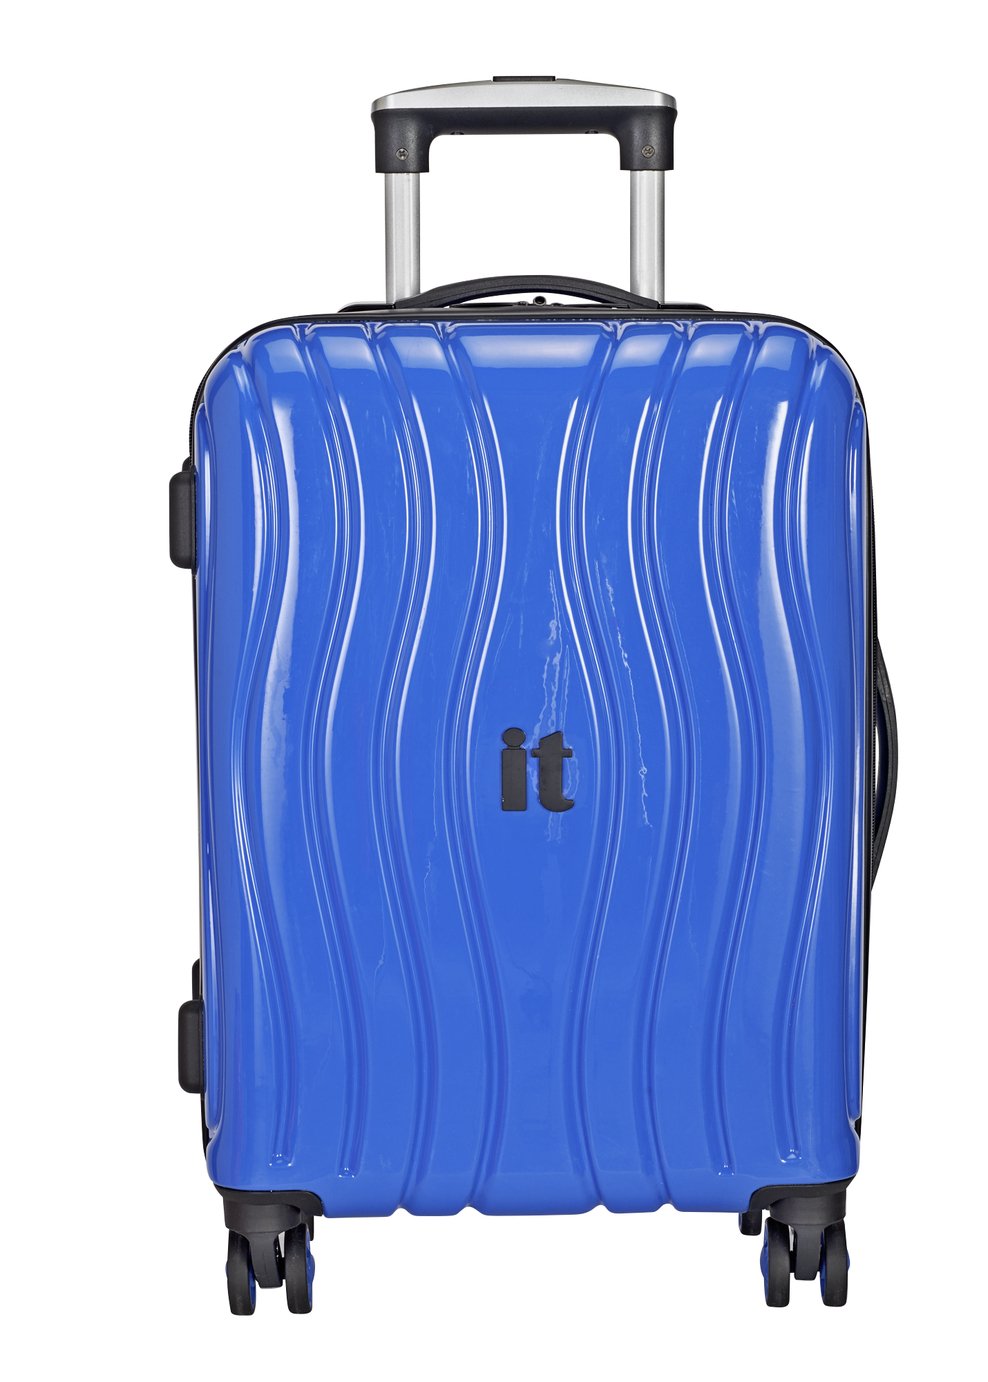 IT Luggage 8 Wheel Hard Cabin Suitcase - Metallic Blue